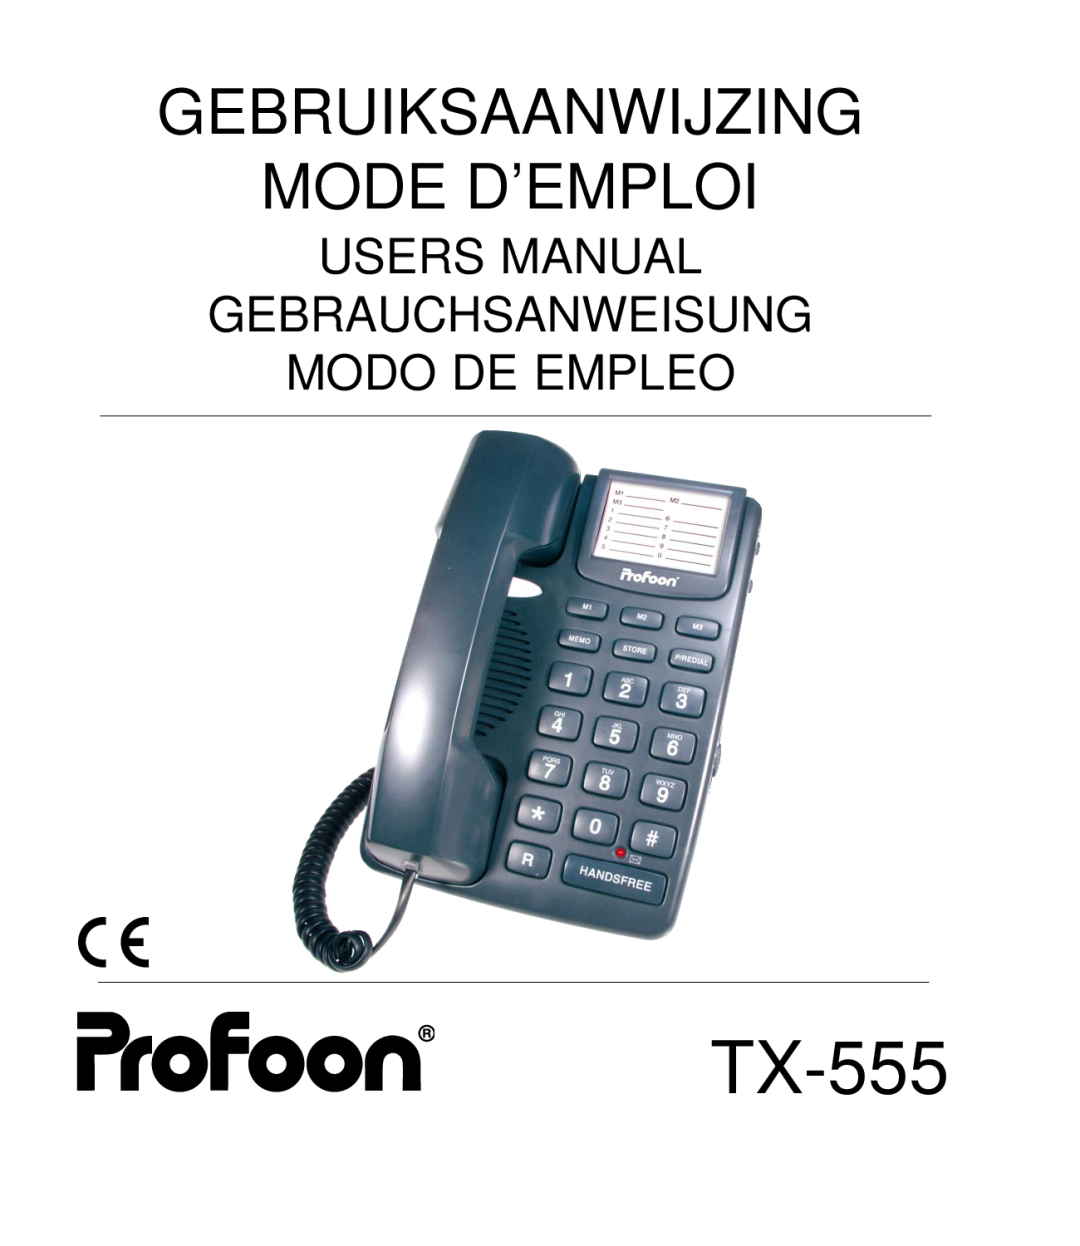 Profoon Telecommunicatie TX-555 manual Gebruiksaanwijzing Mode D’Emploi, Users Manual Gebrauchsanweisung Modo De Empleo 